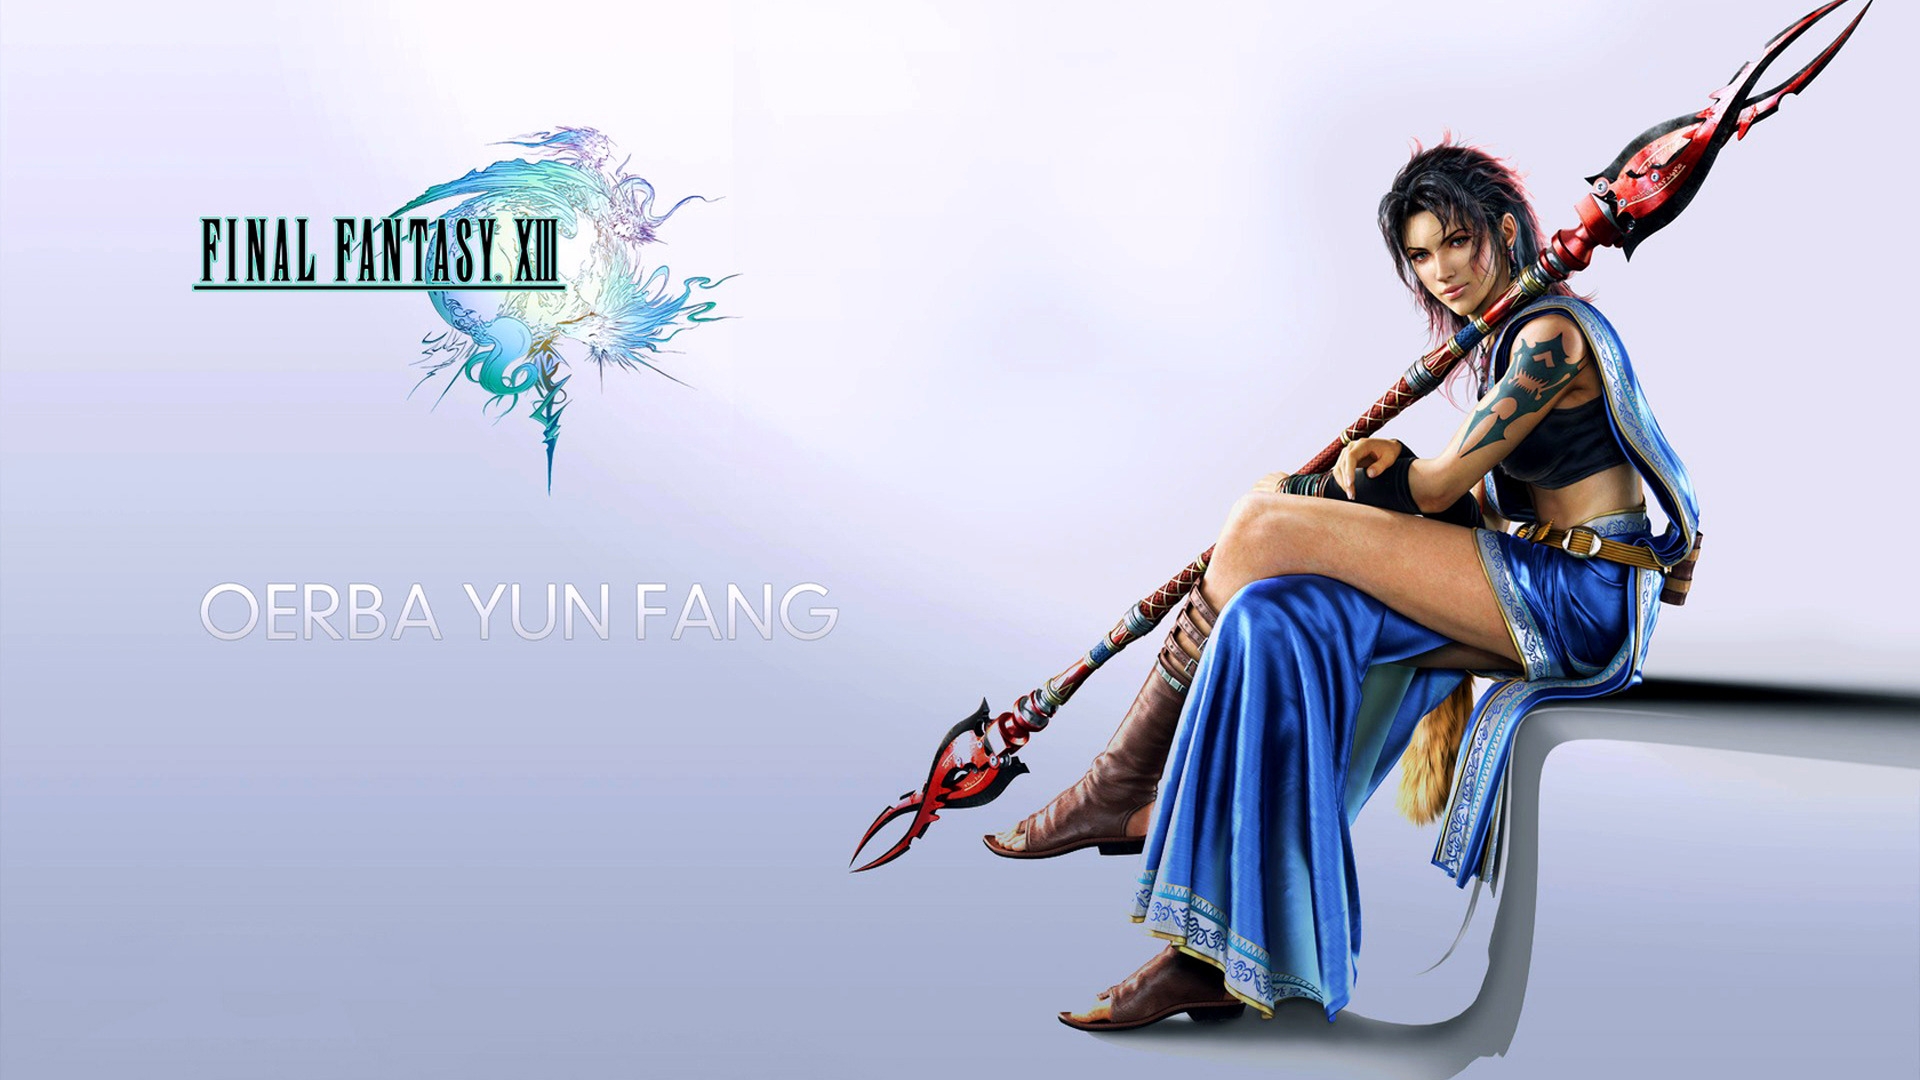 Final Fantasy XIII Oerba Yun Fang for 1920 x 1080 HDTV 1080p resolution